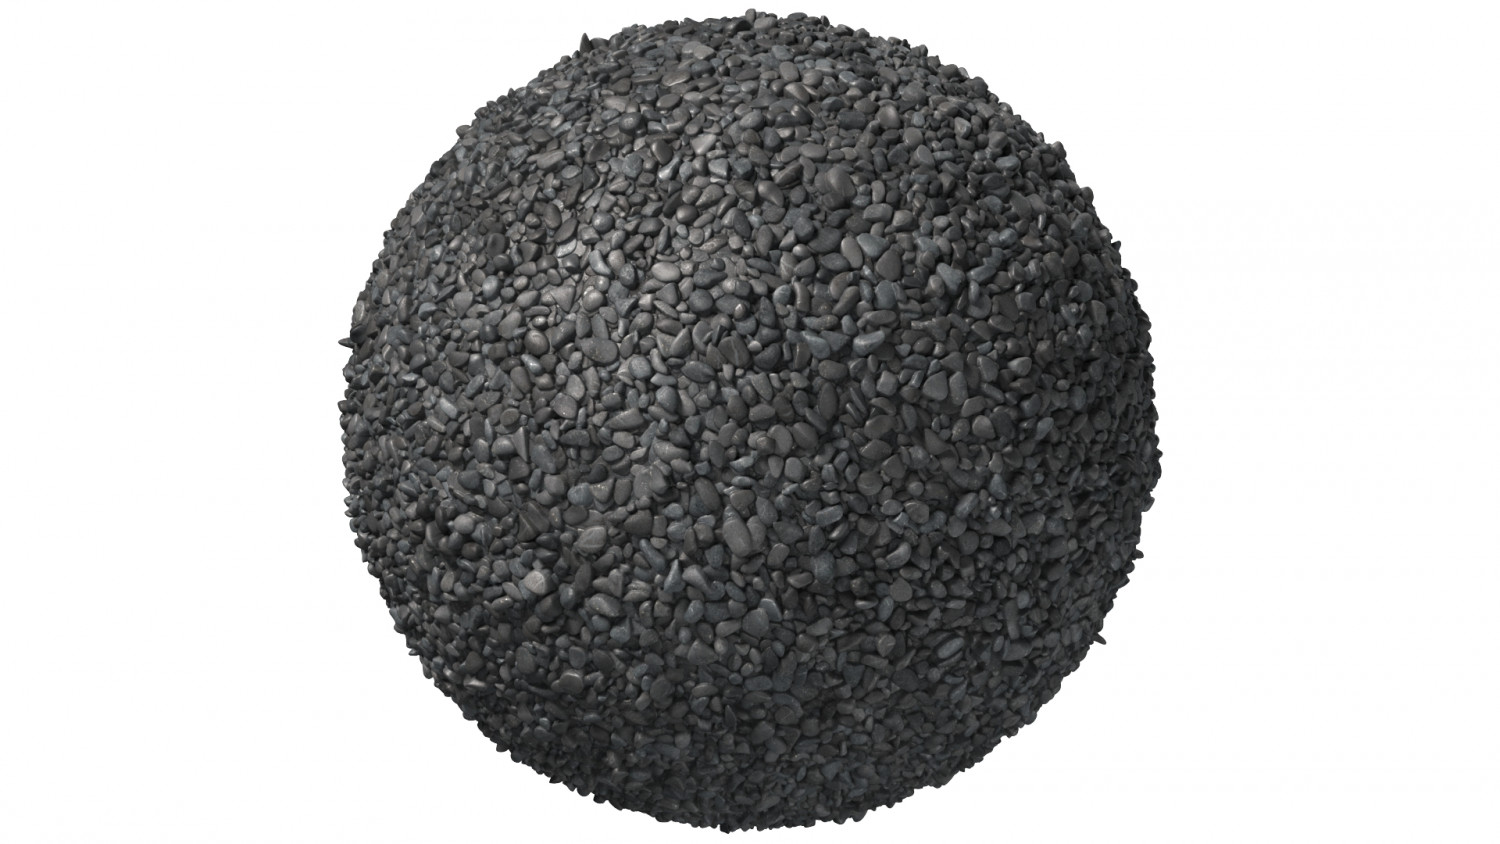 Black pebbles stones texture